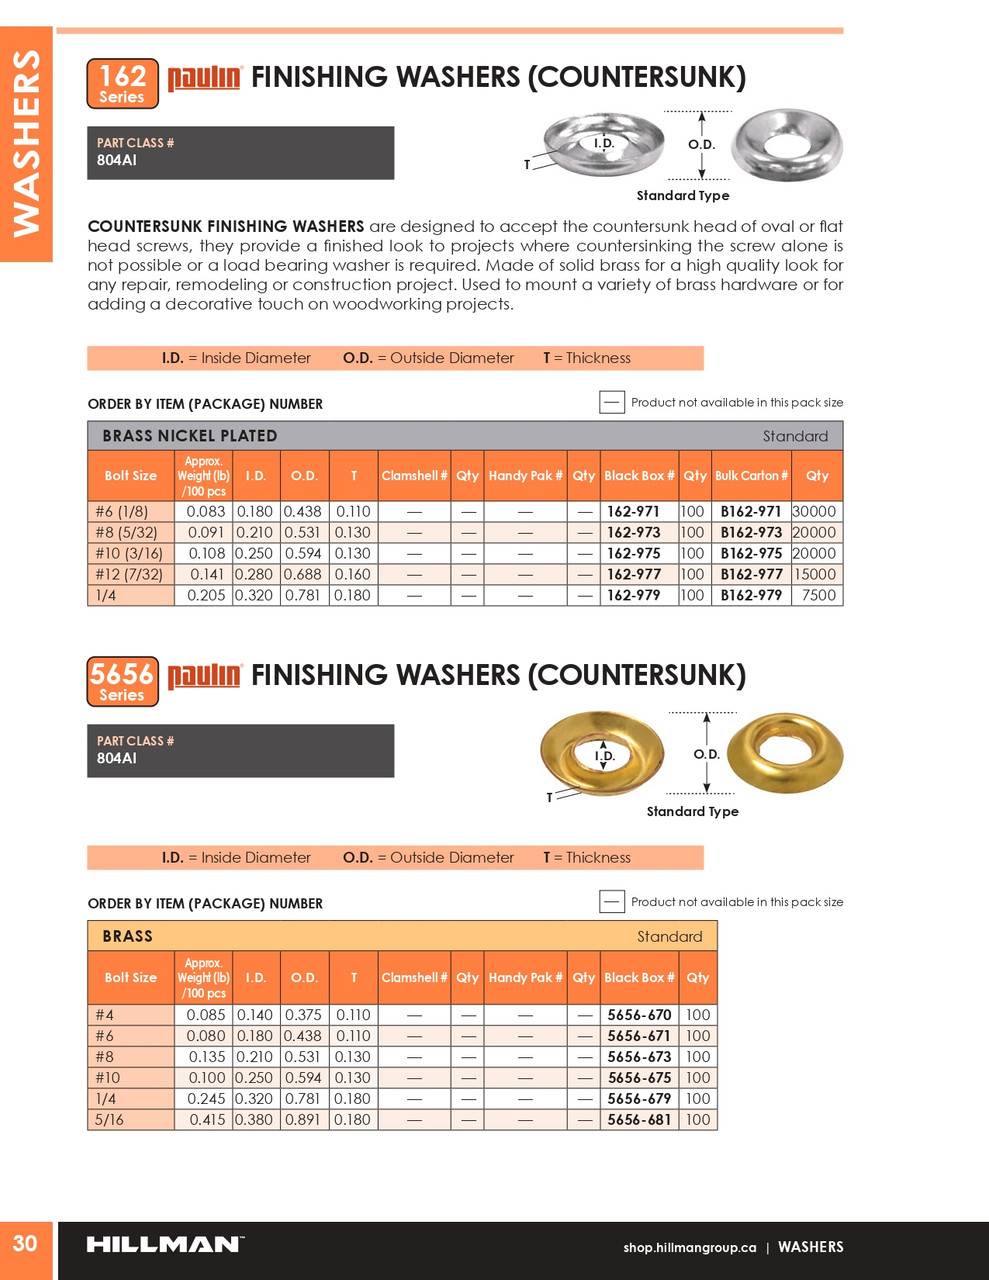 #10 Brass Finishing Washer 100 Pc.   5656-675